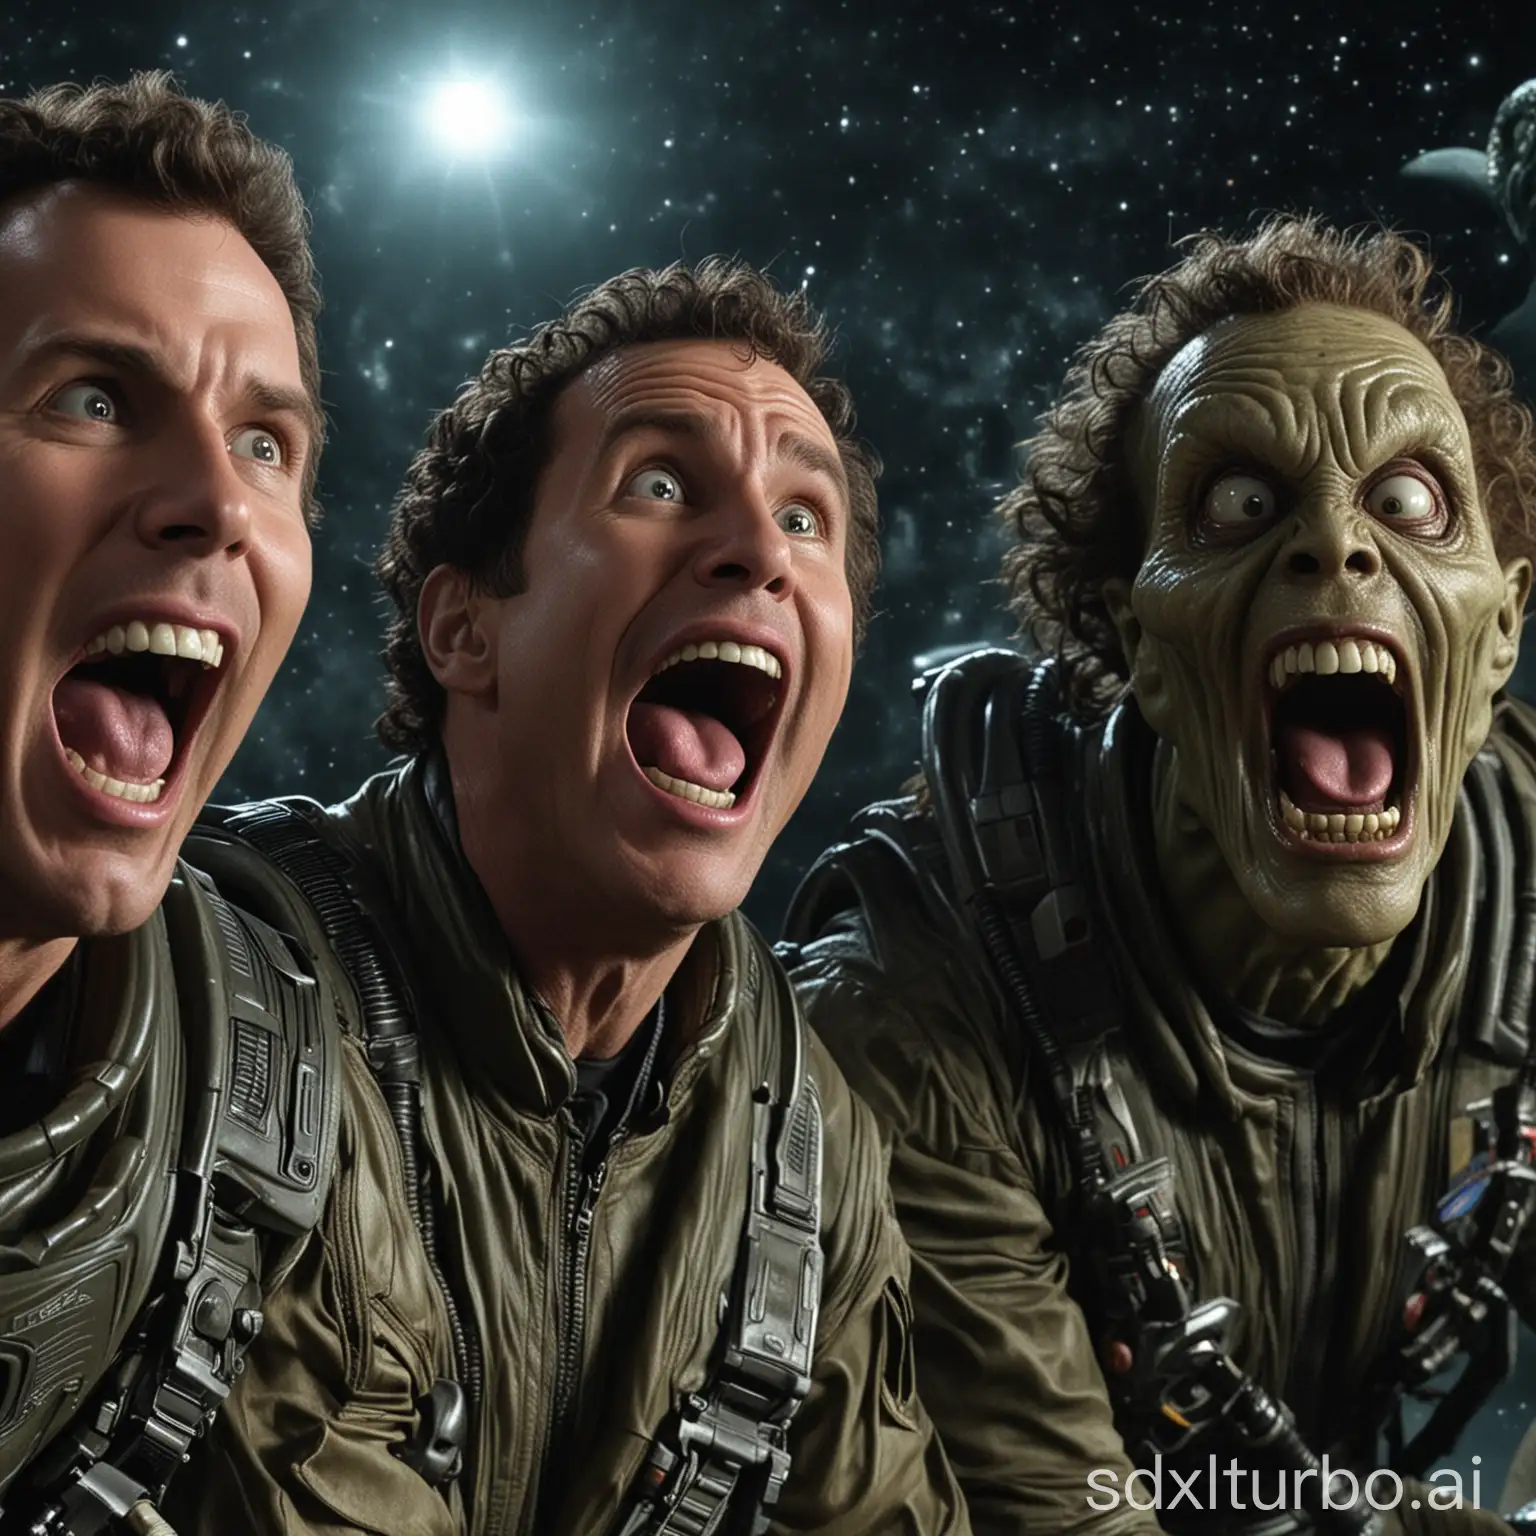 Celebrities-Will-Ferrell-Adam-Sandler-and-Ben-Stiller-Laughing-in-Alien-Space-Night-Background